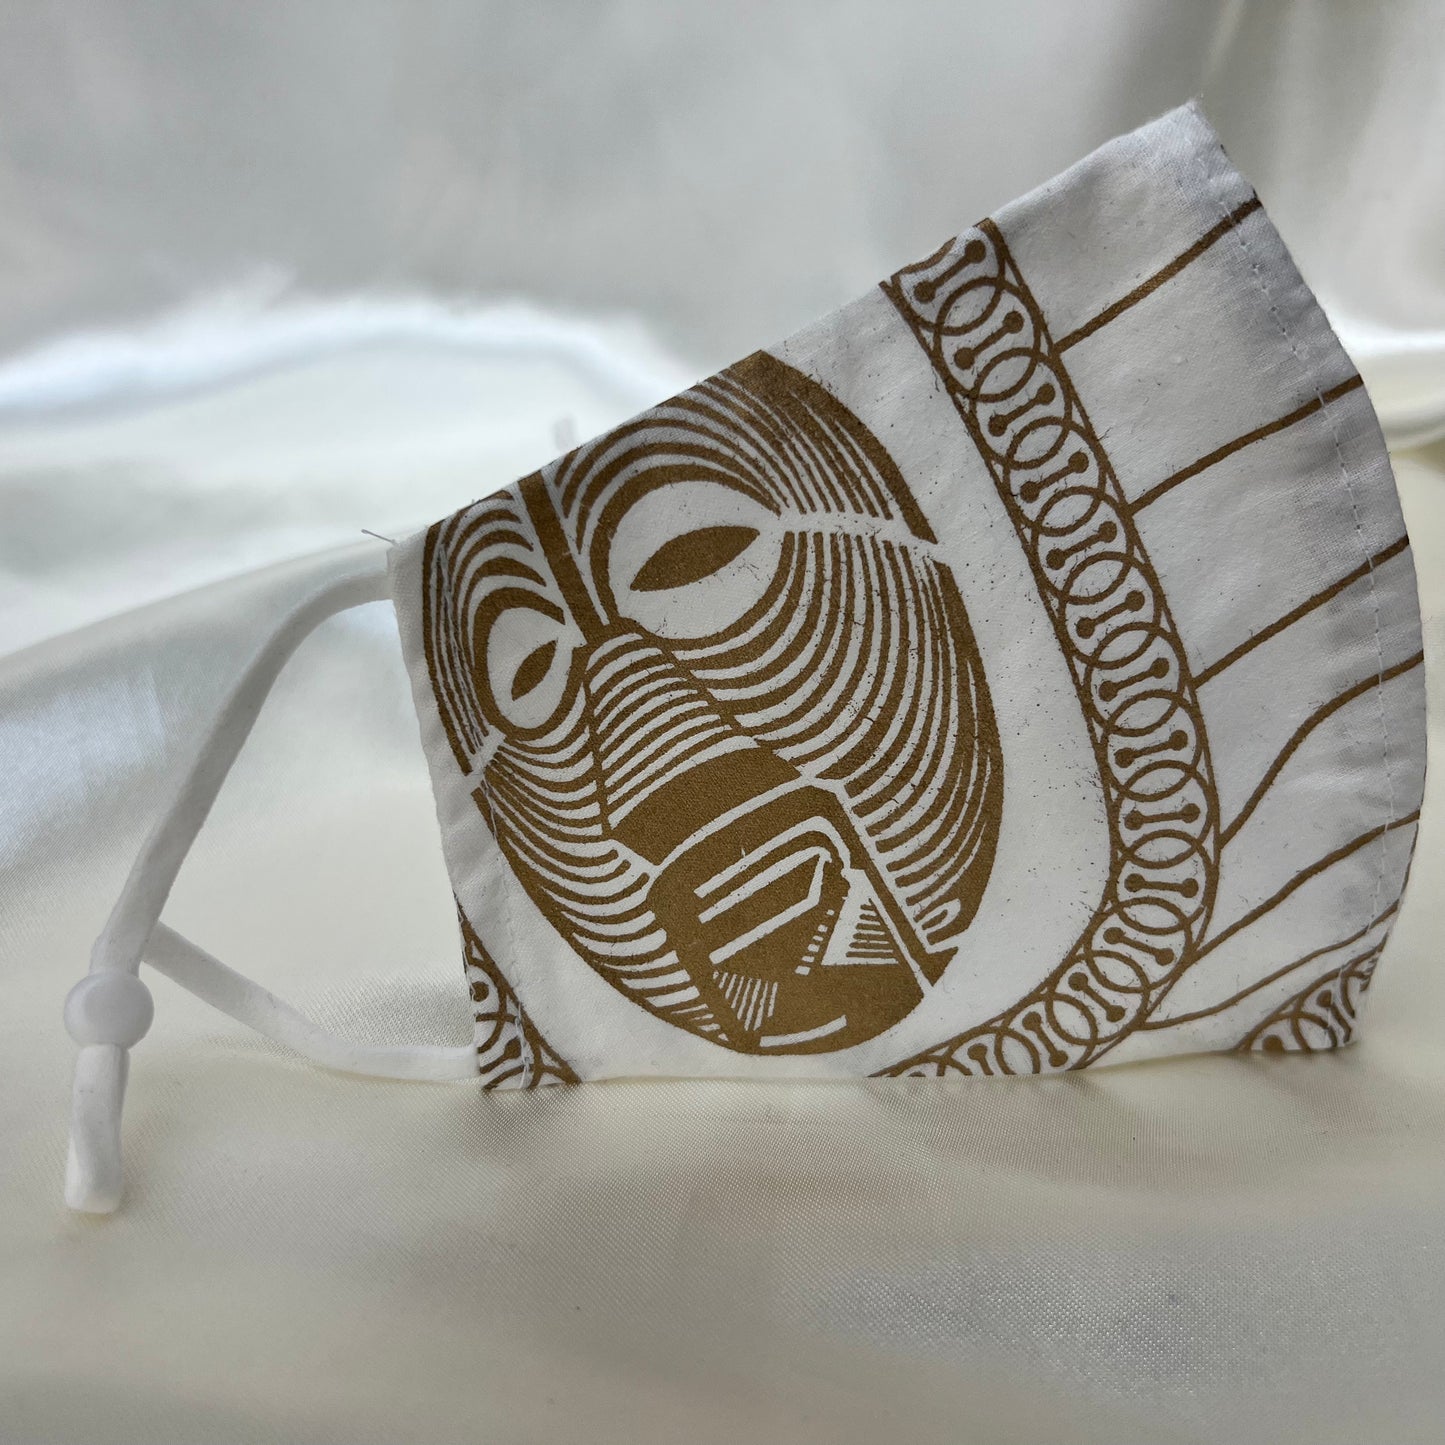 Yoruba Mask